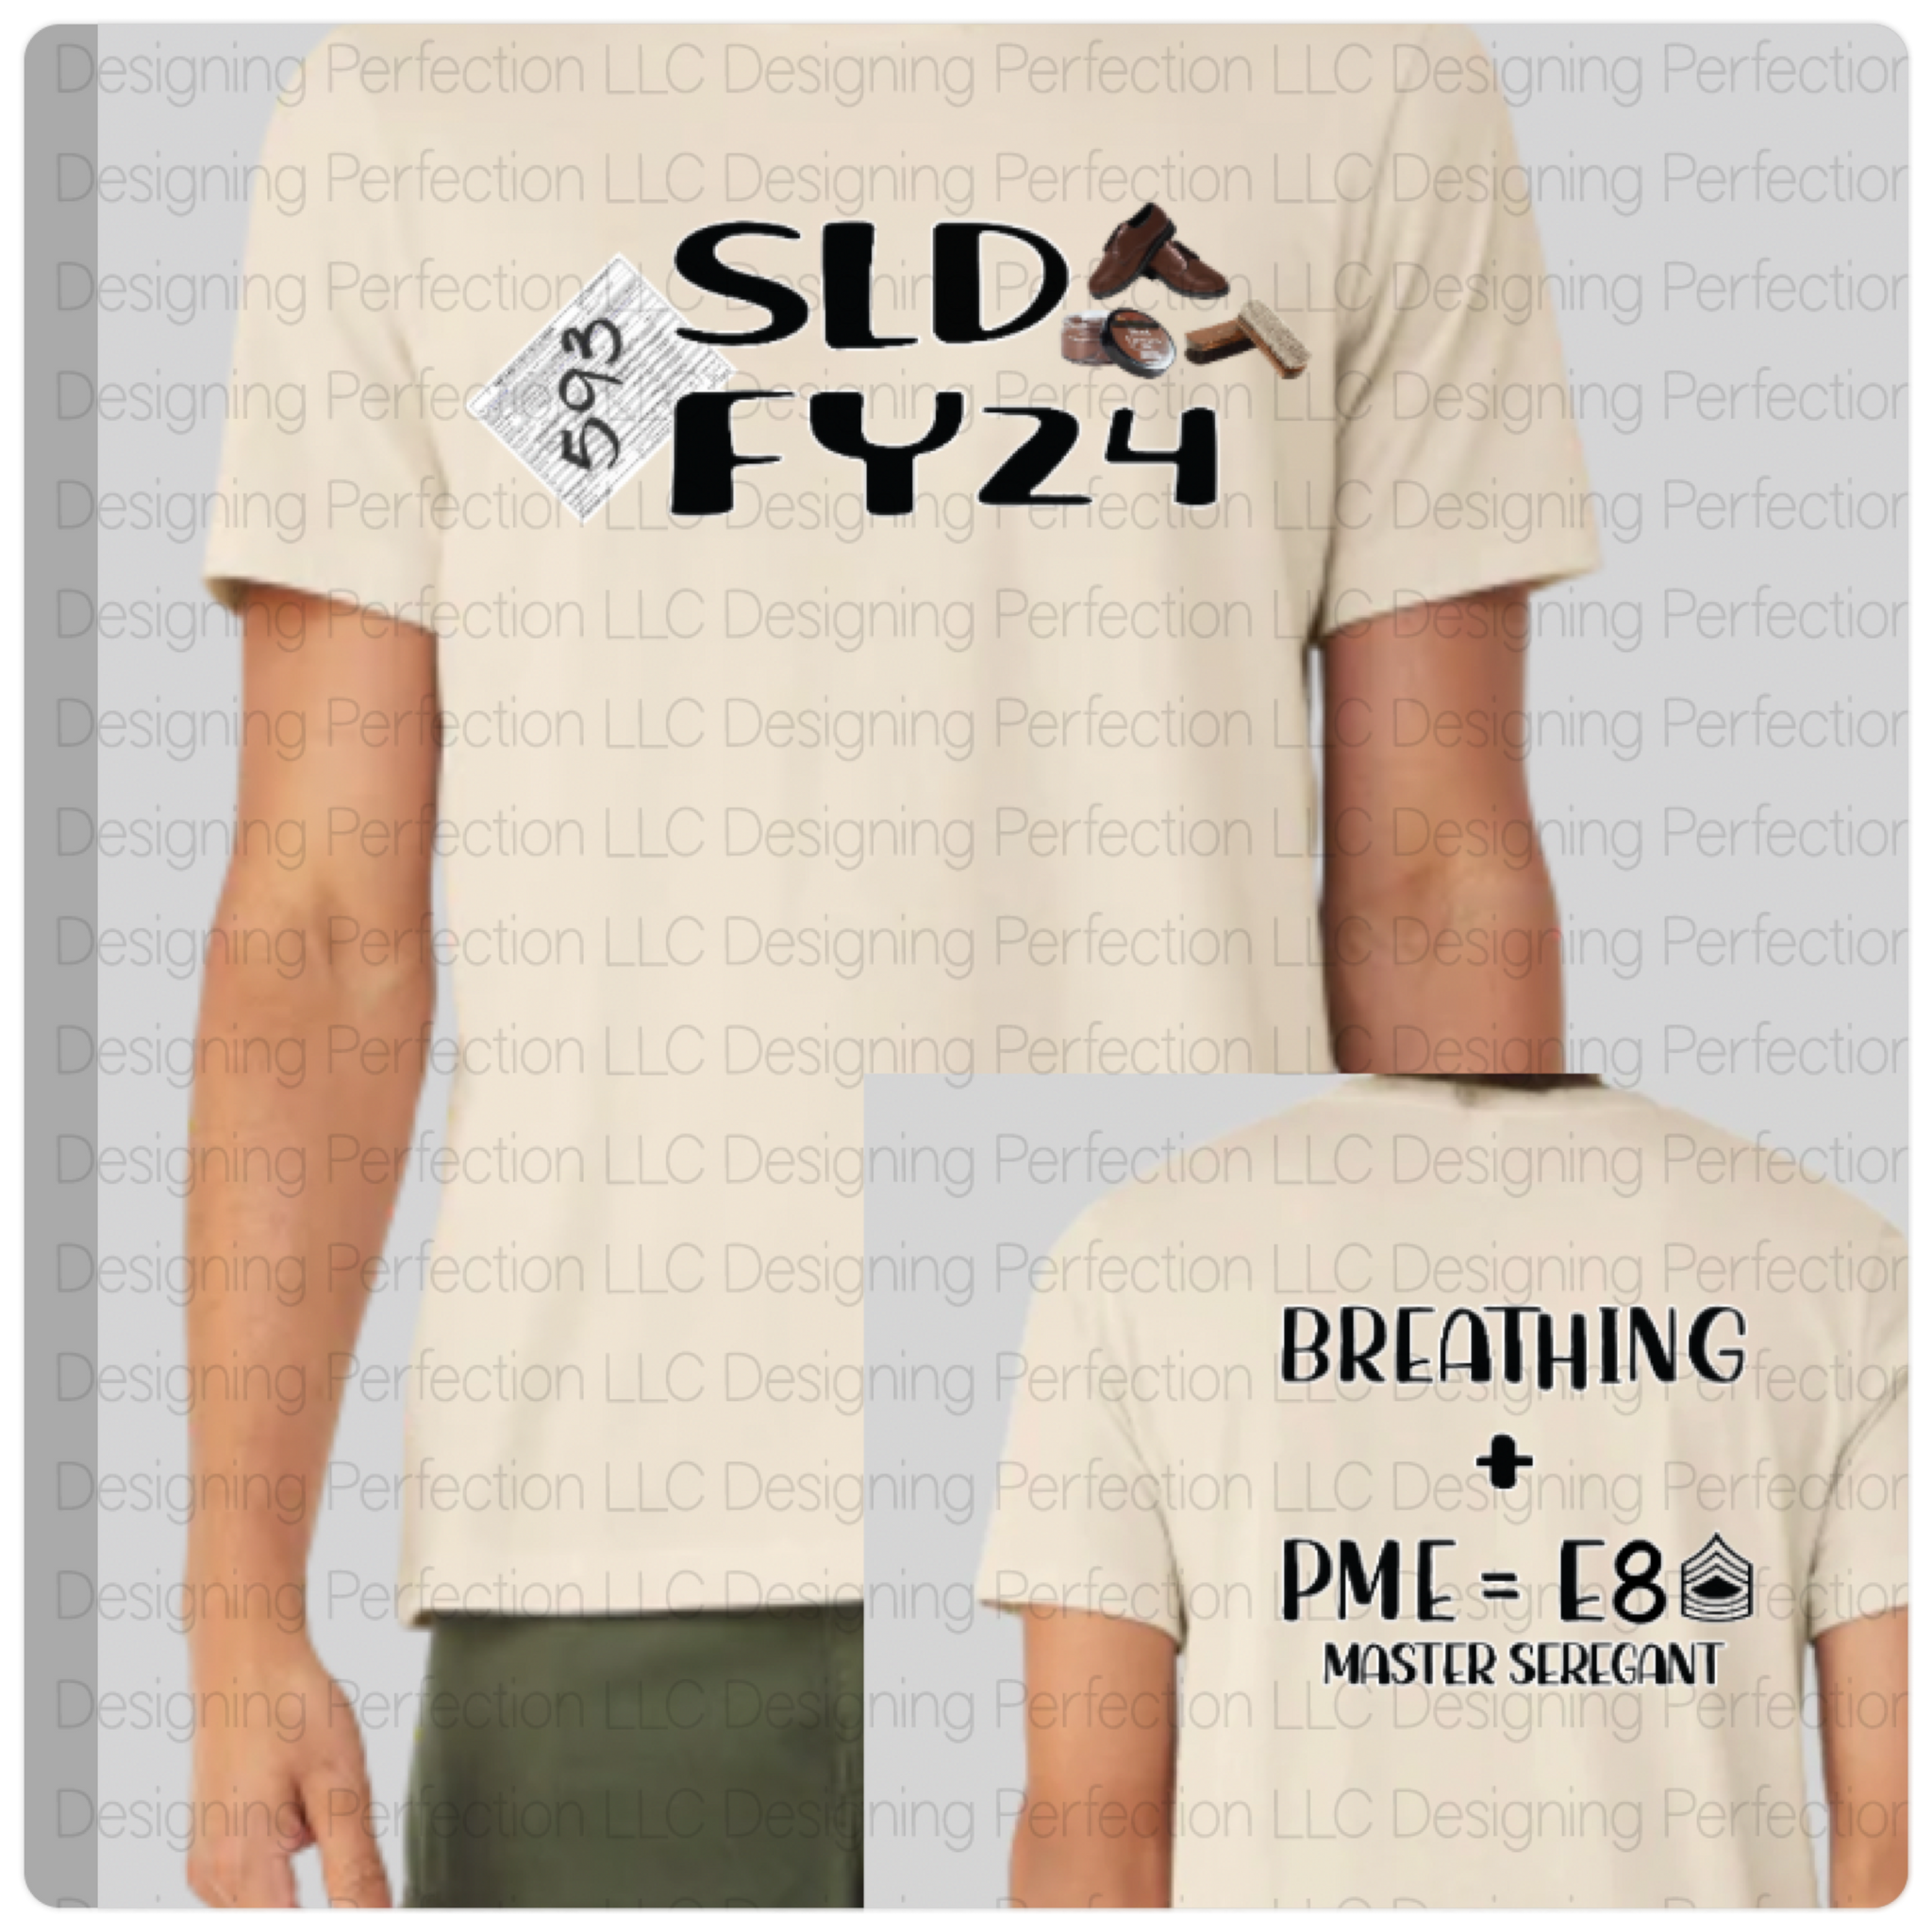 SLD FY24 - Custom